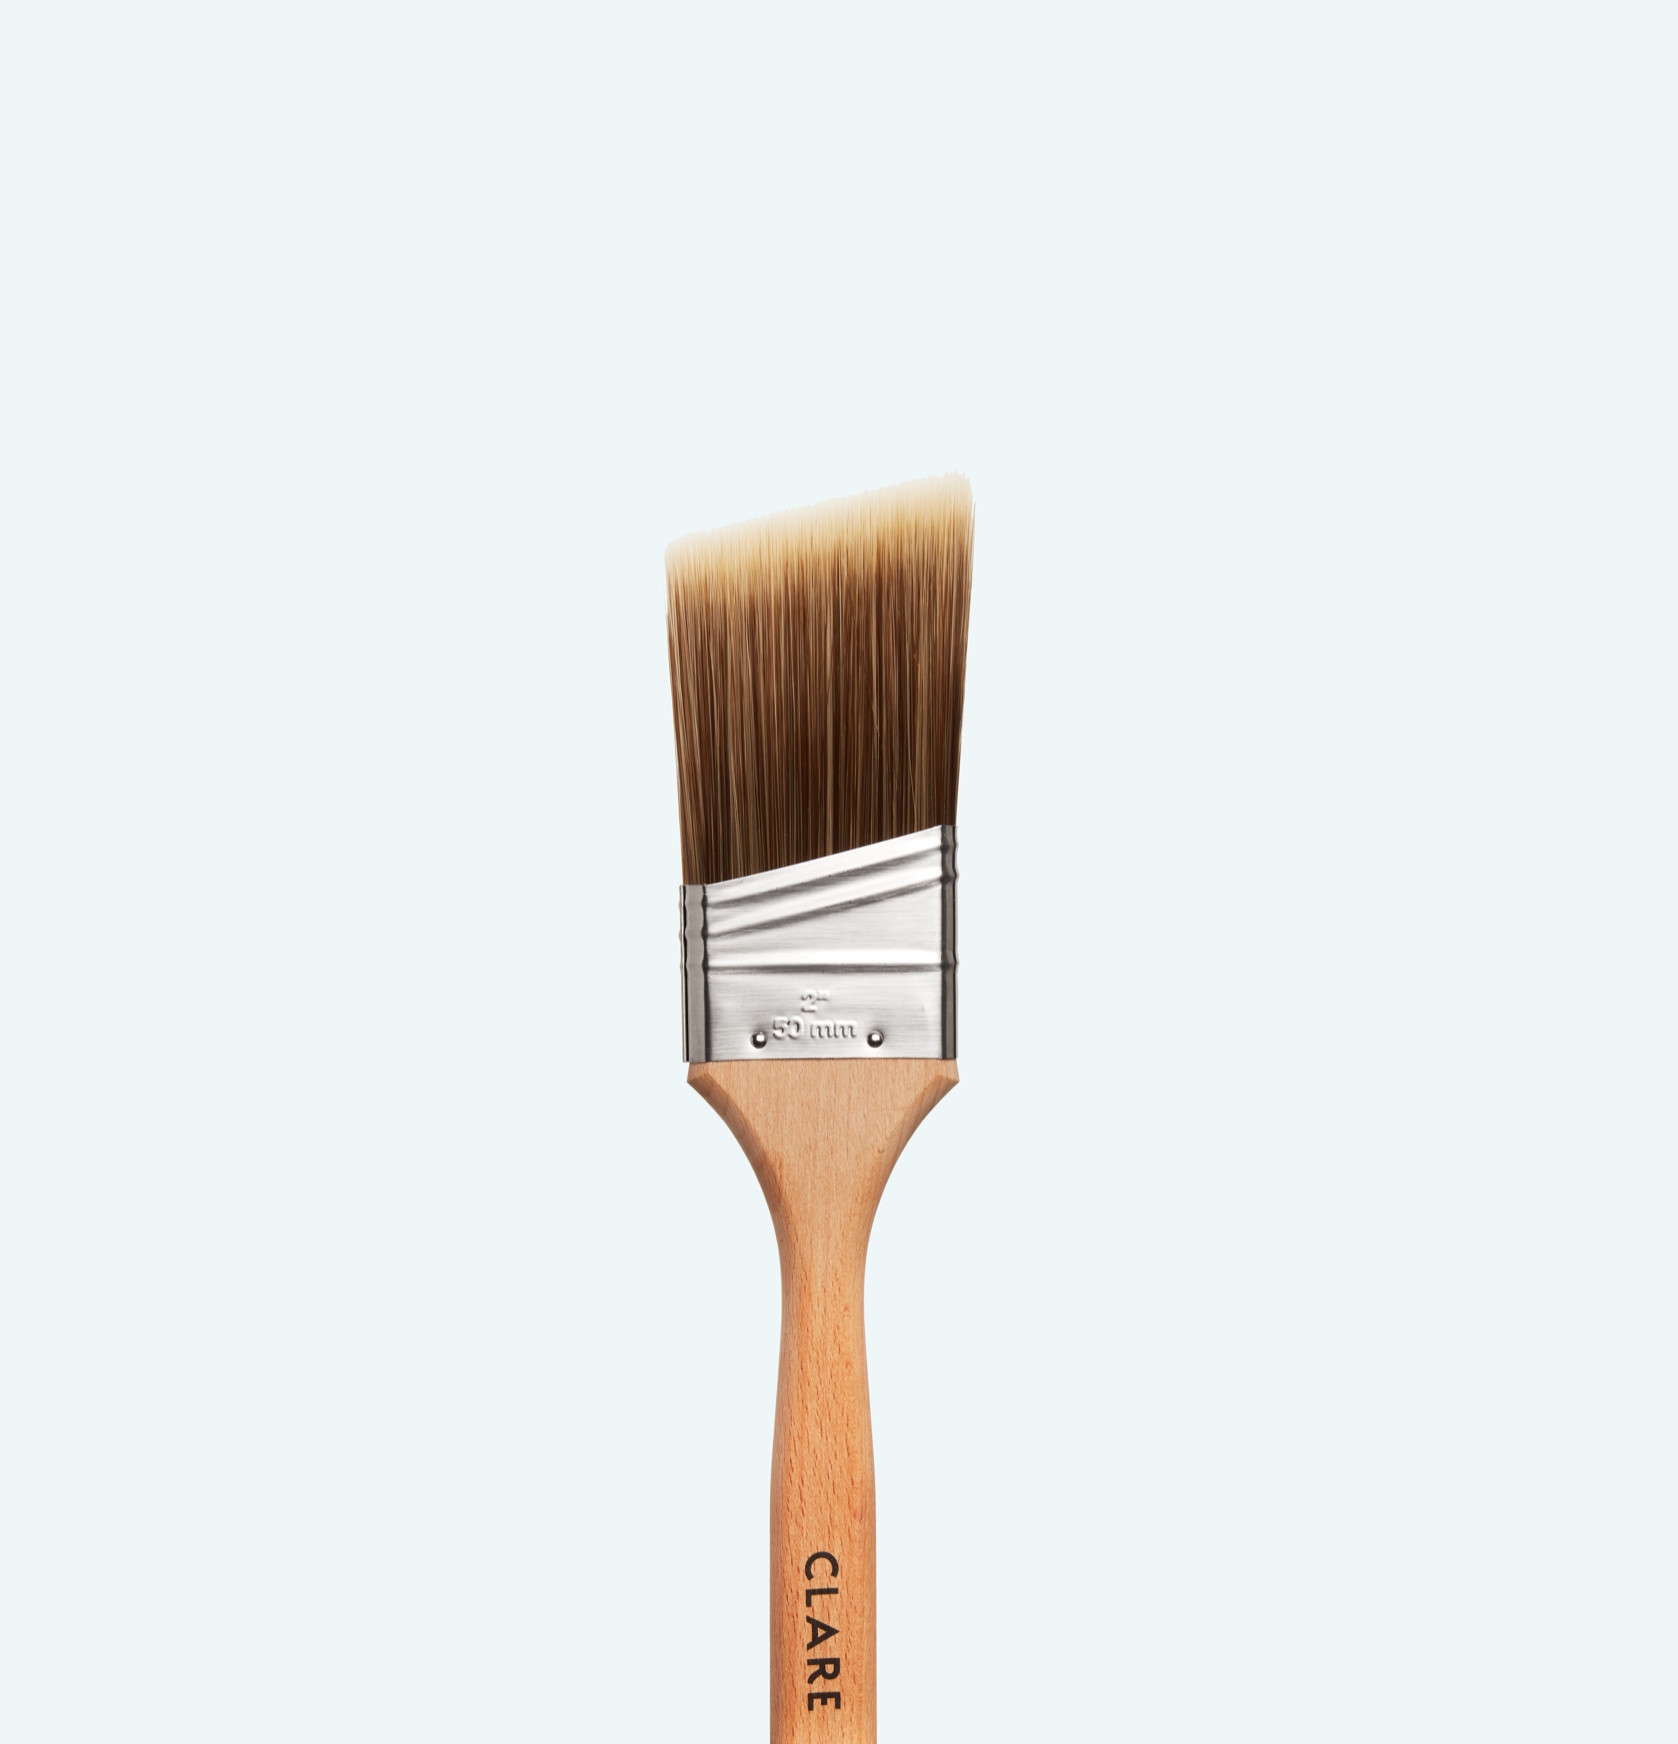 Clare Paint - 2” Angle Paint Brush - Image 2